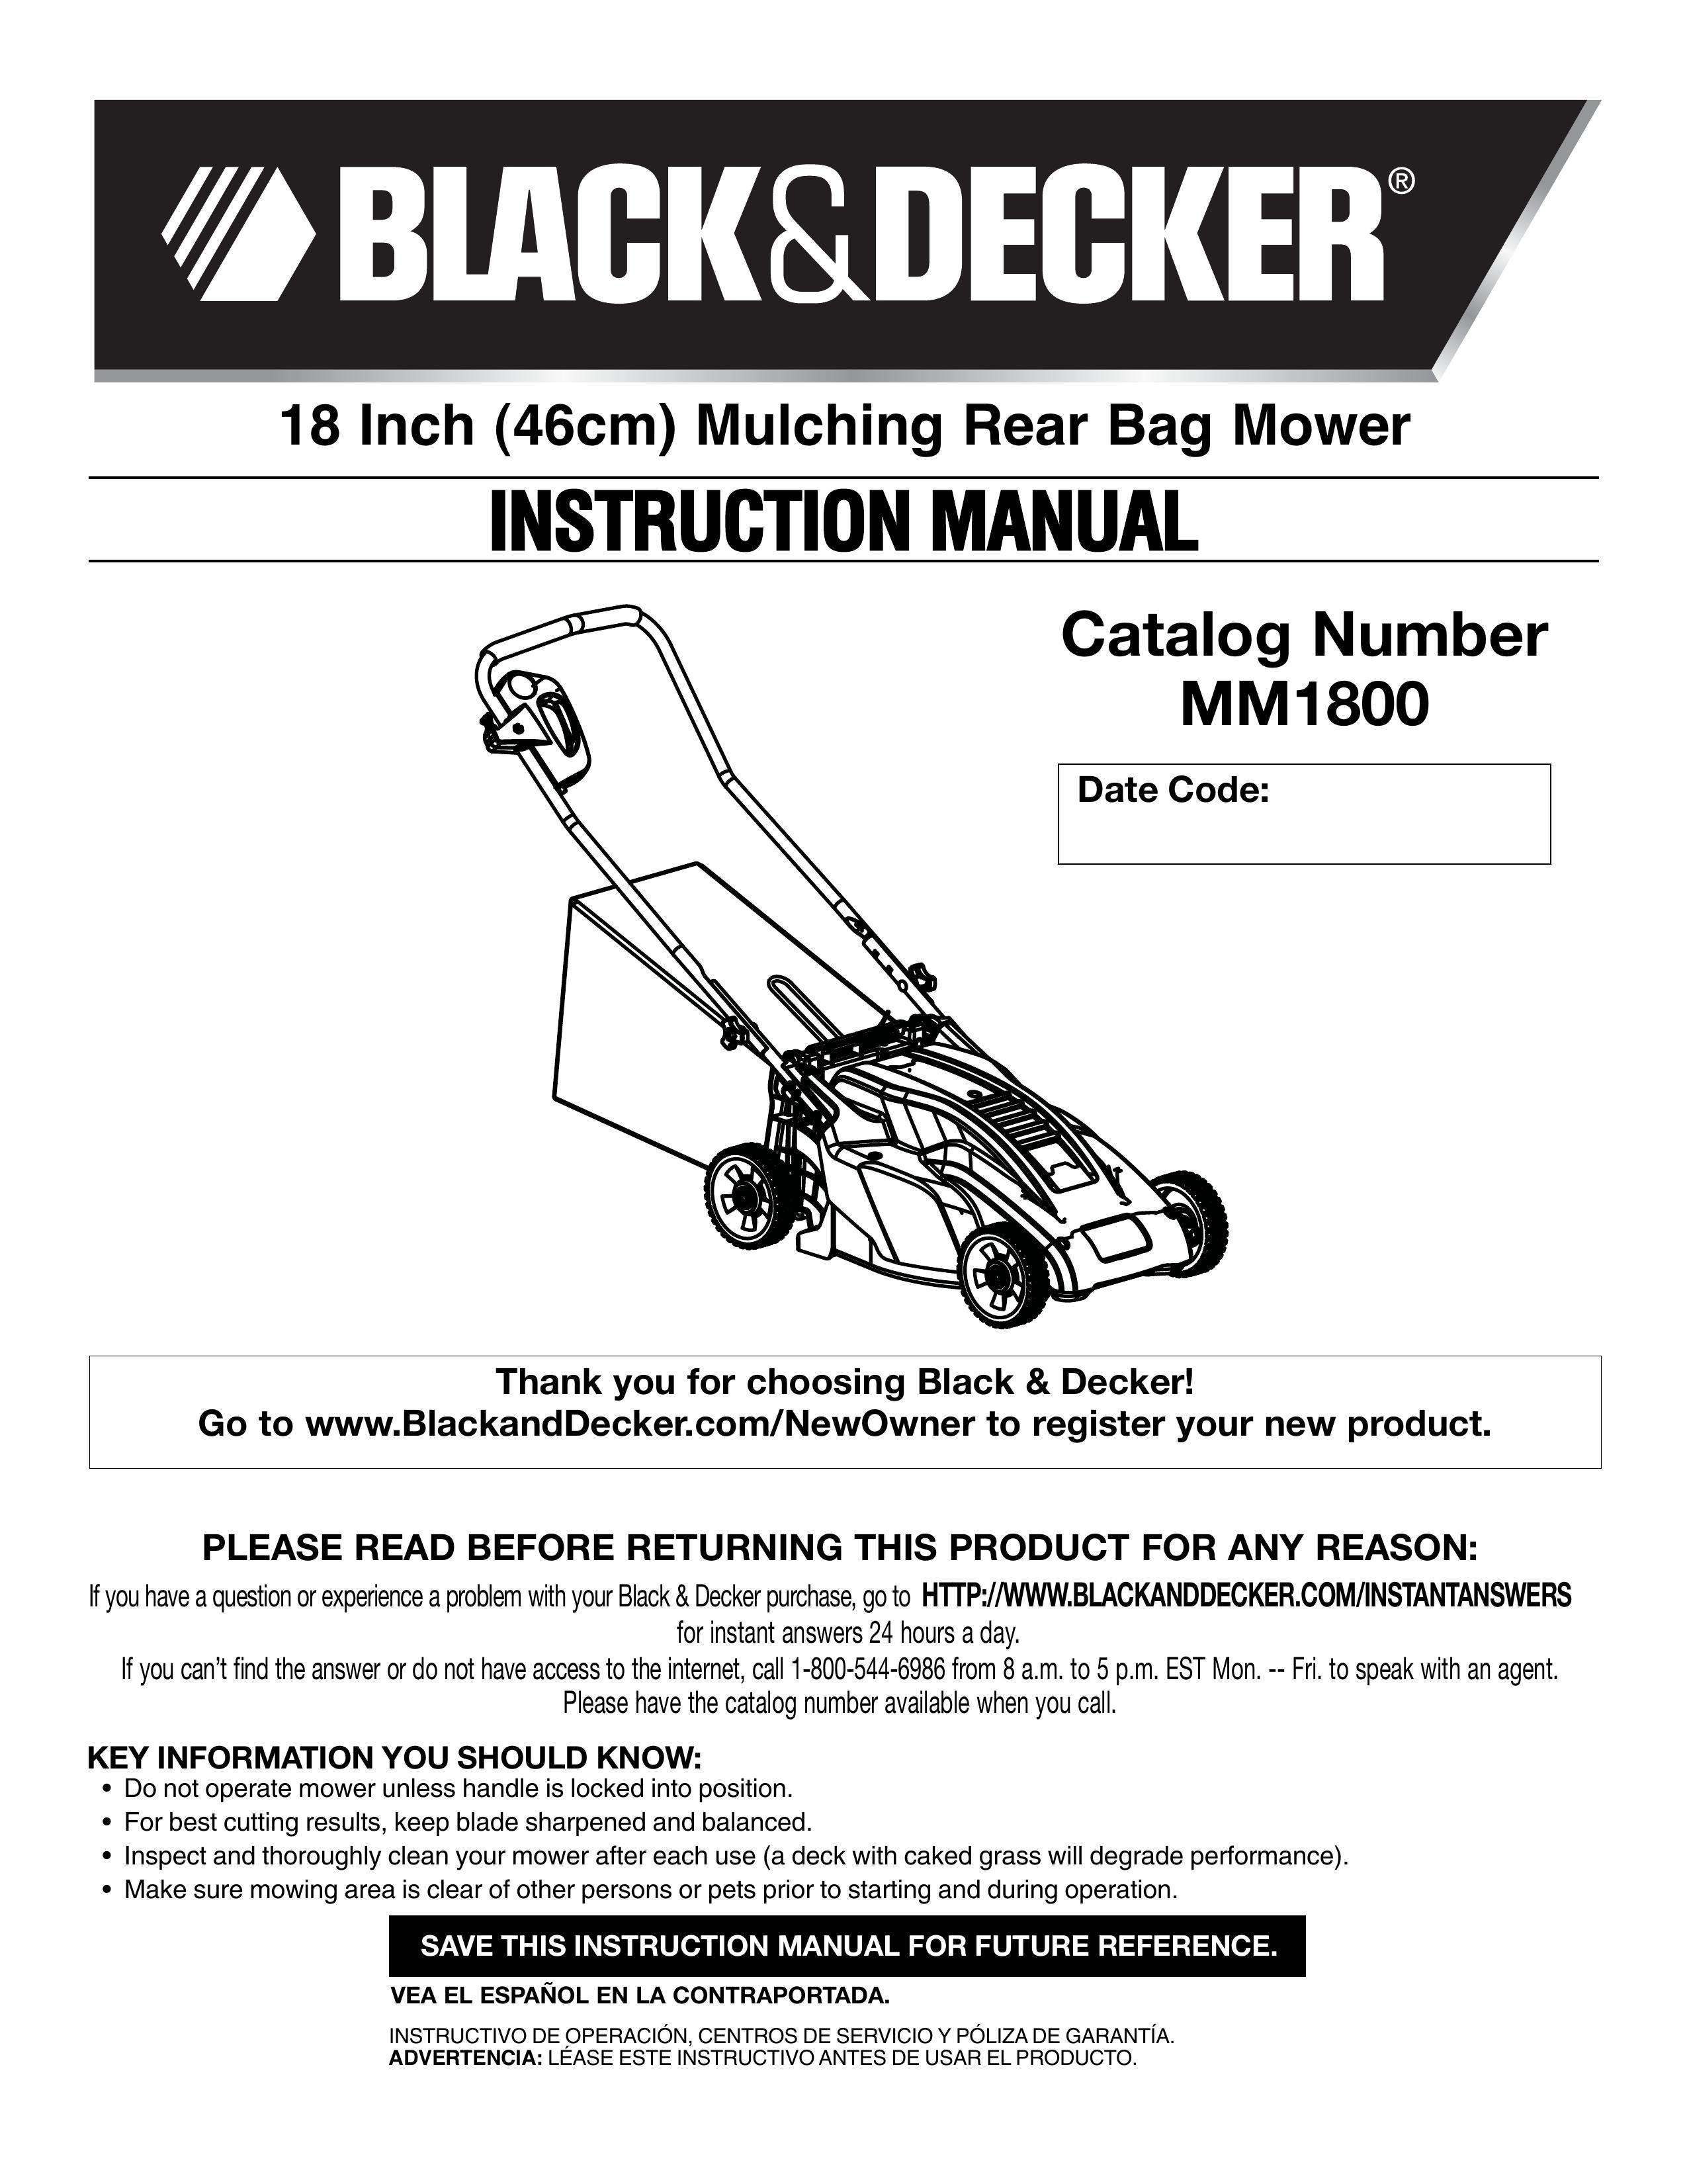 Black & Decker MM1800 Lawn Mower User Manual